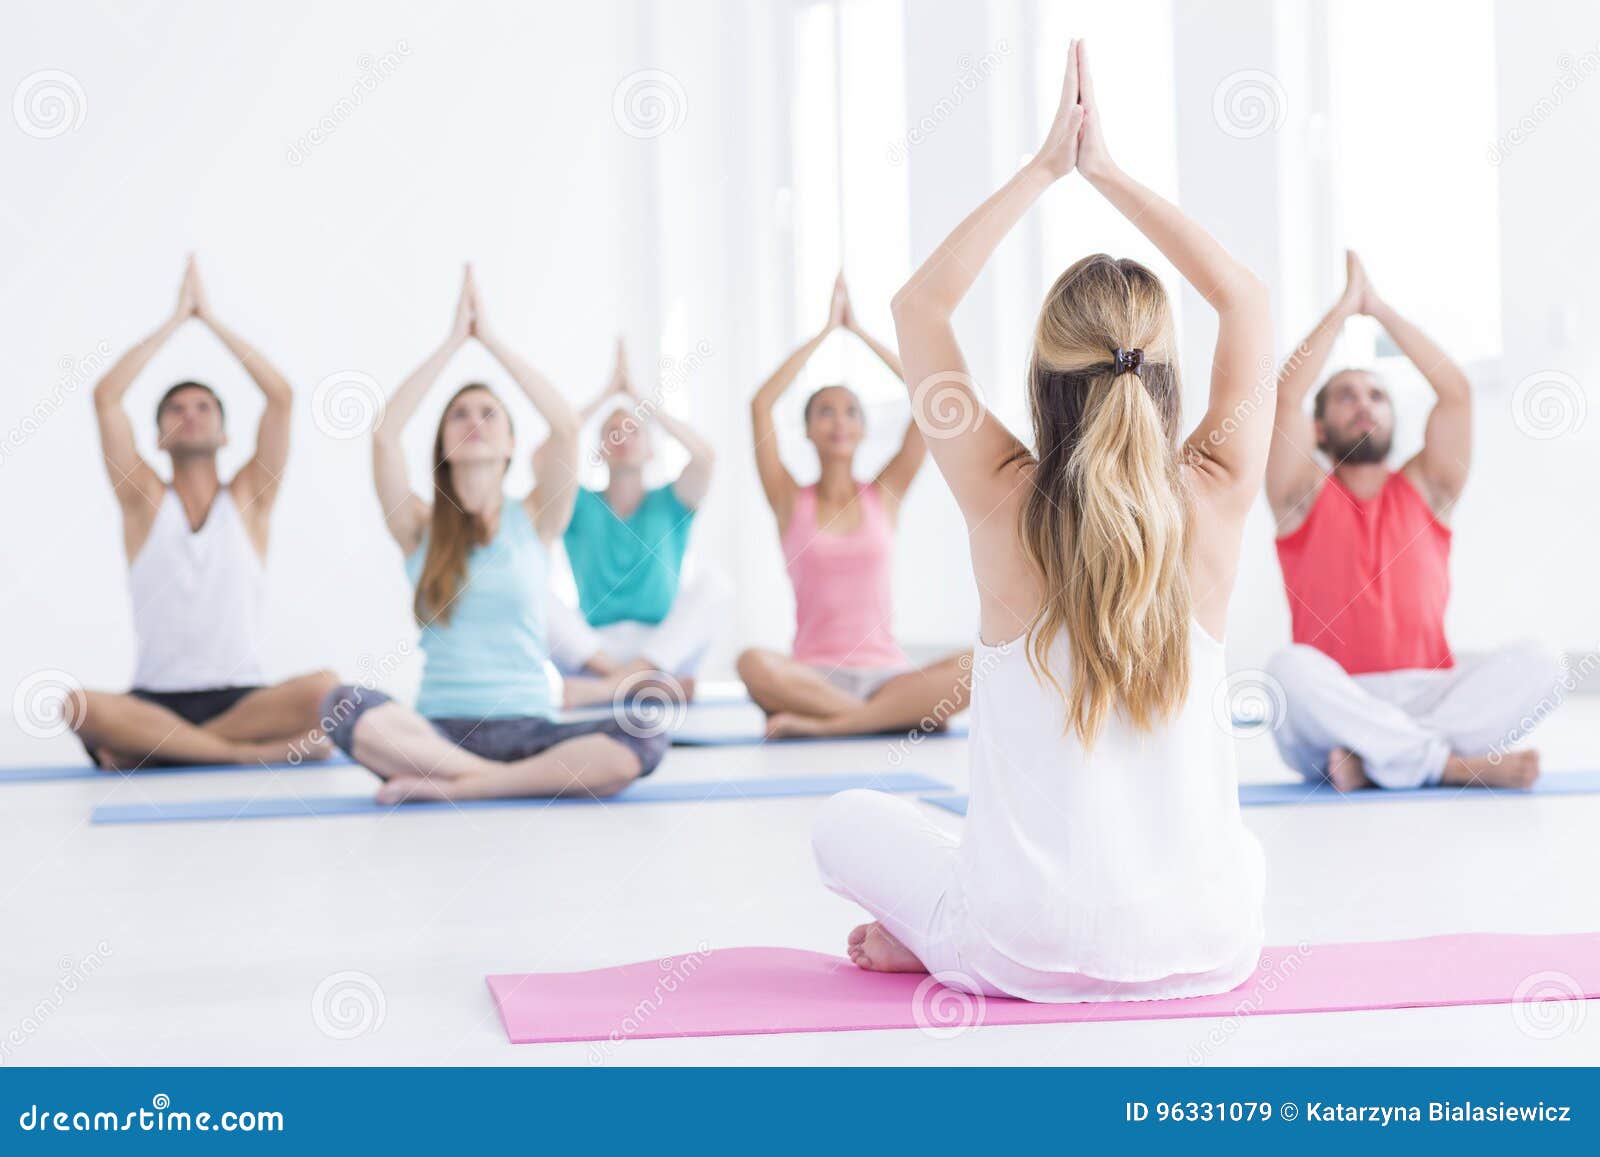 concept of yoga class